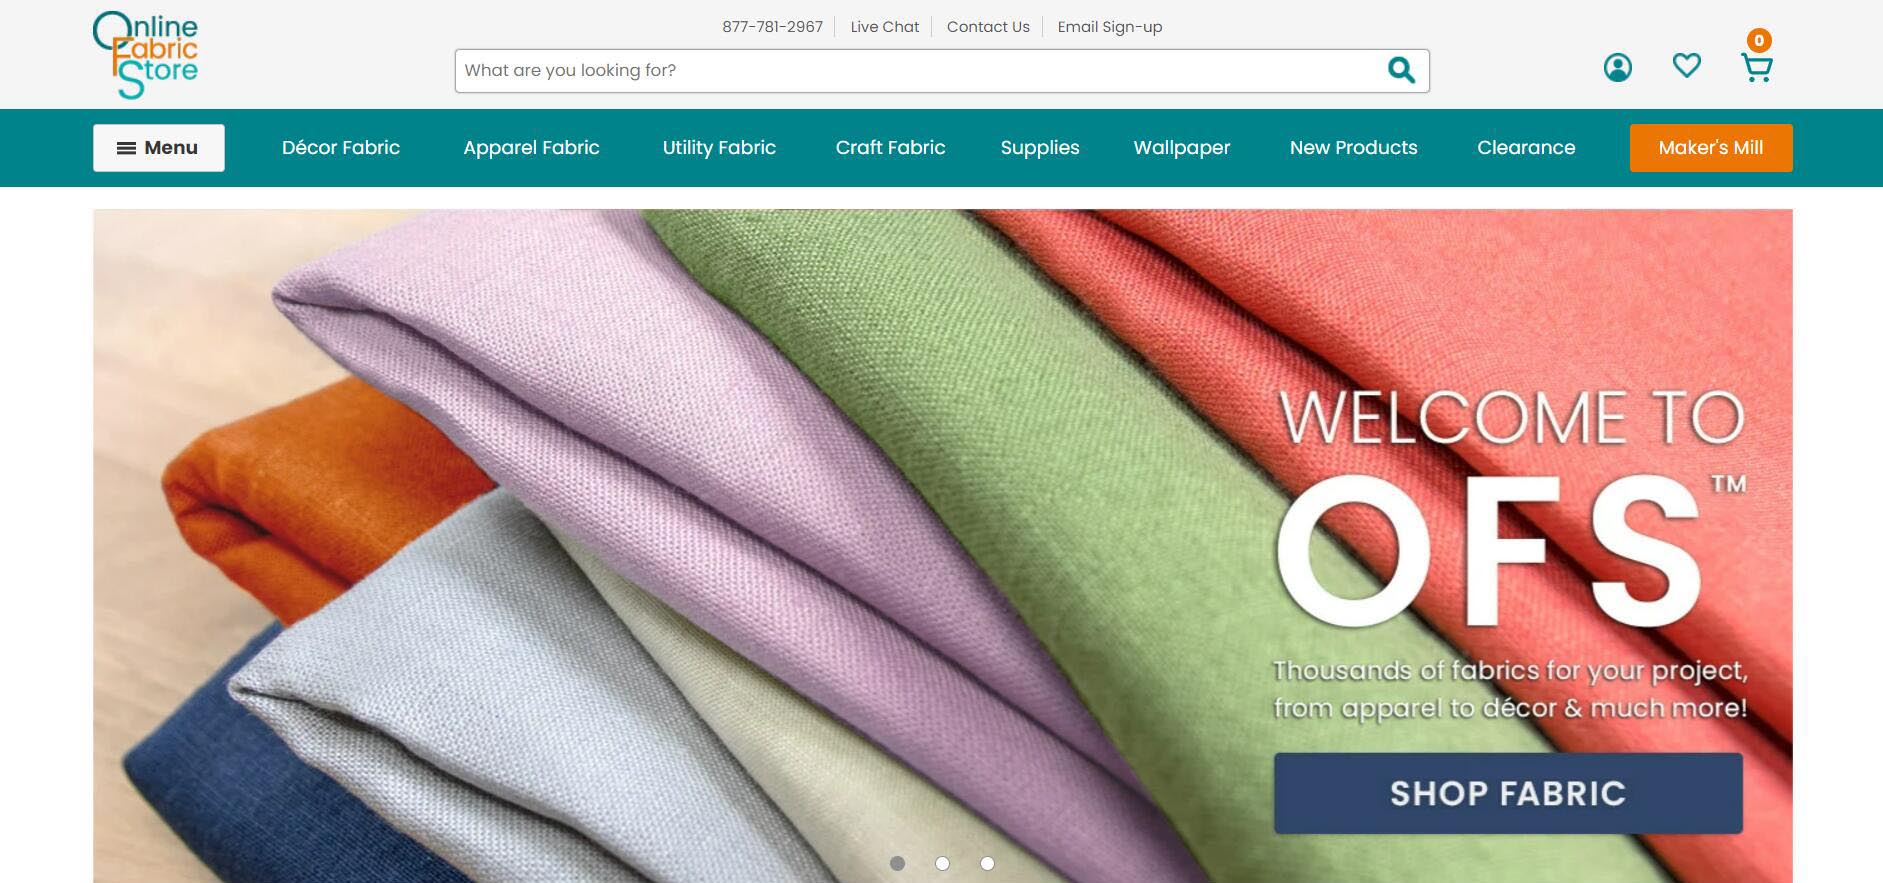 Online Fabric Store Affiliate Program